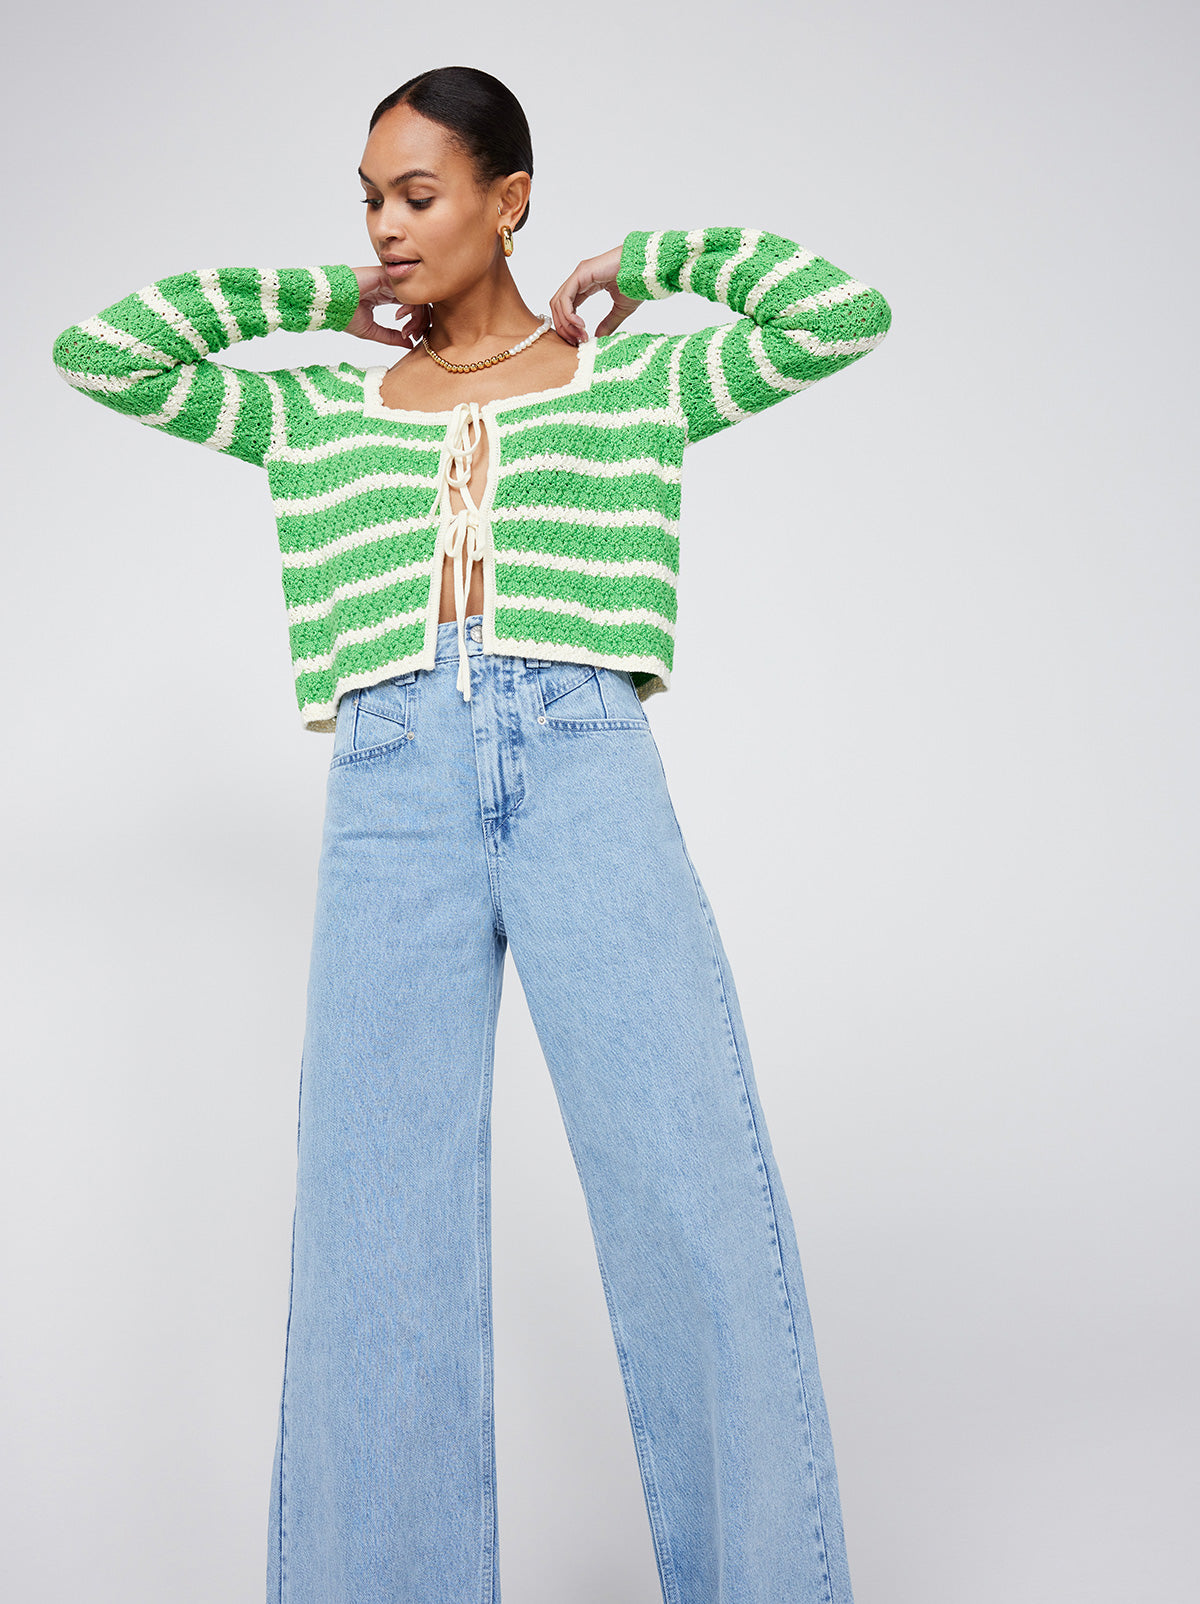 Dionne Green Stripe Knit Cardigan | KITRI Studio